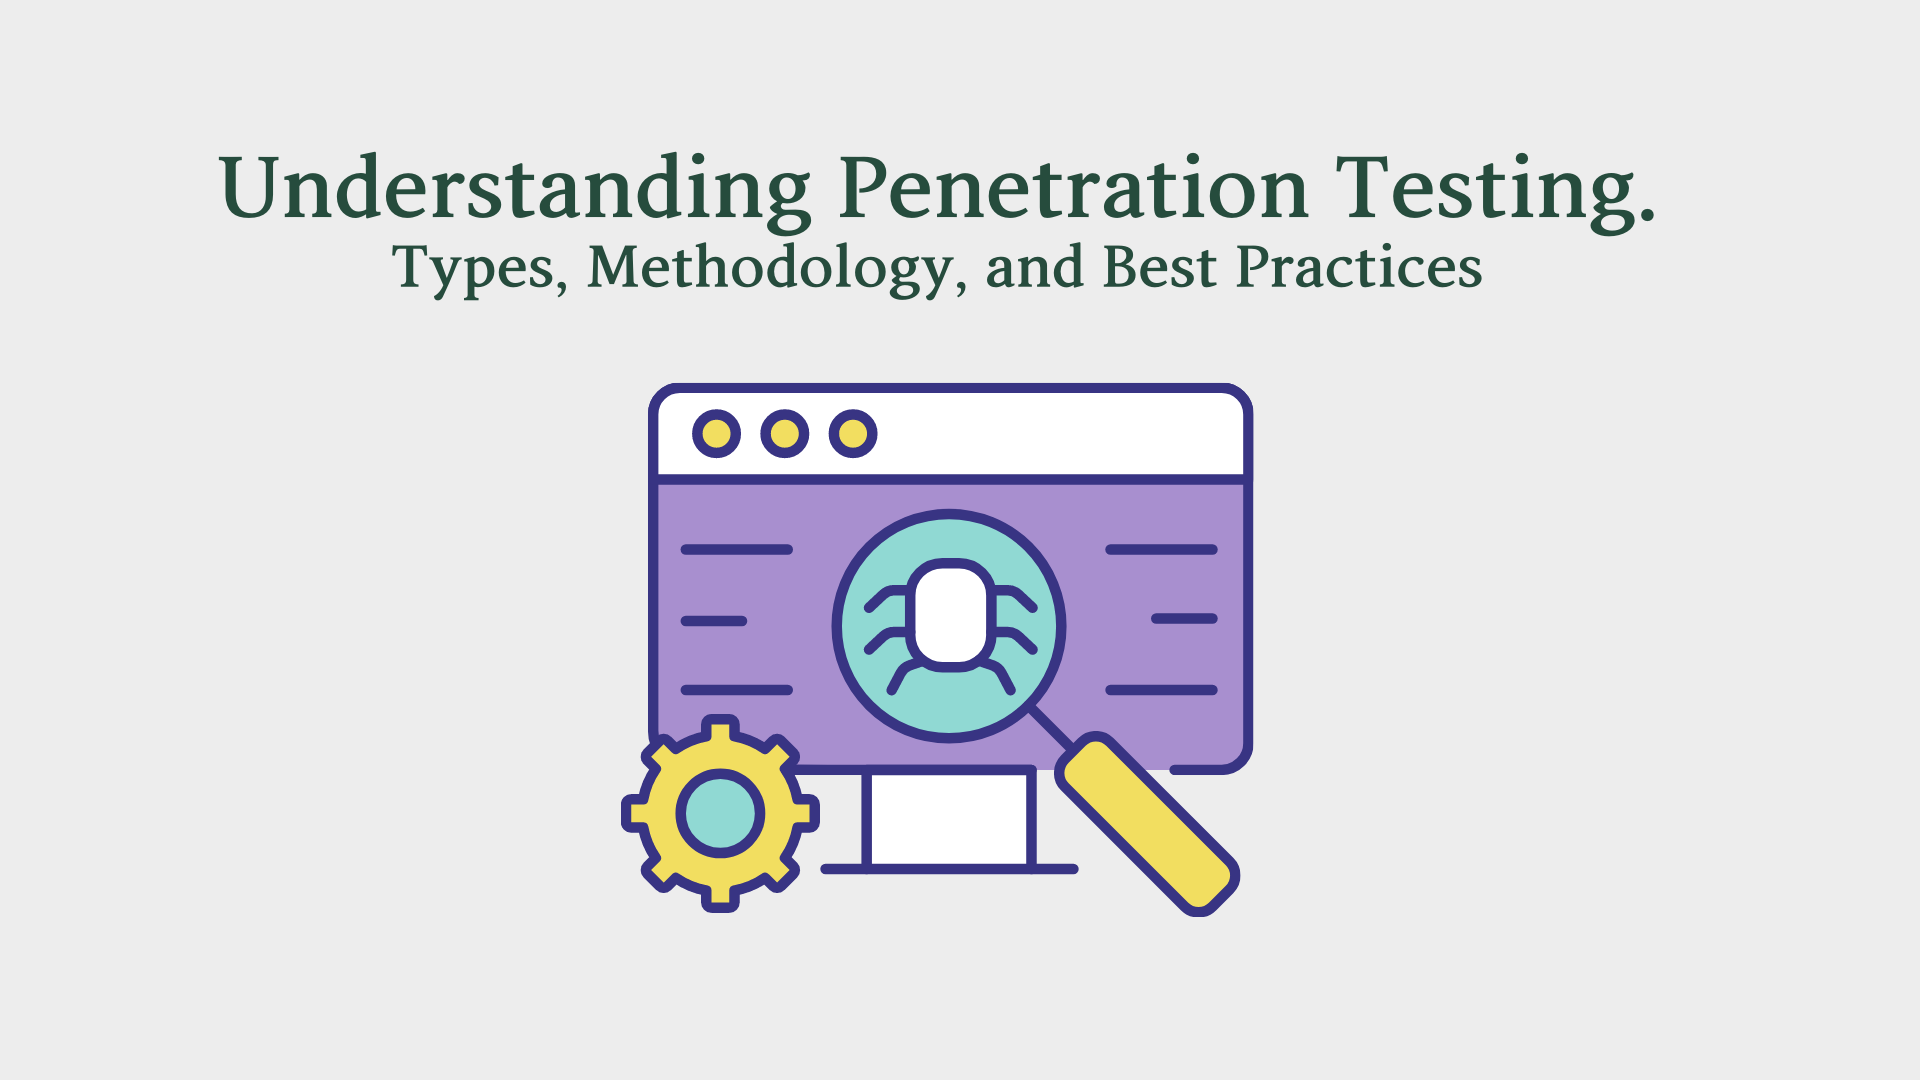 Understanding Penetration Testing: Types, Methodology, and Best Practices